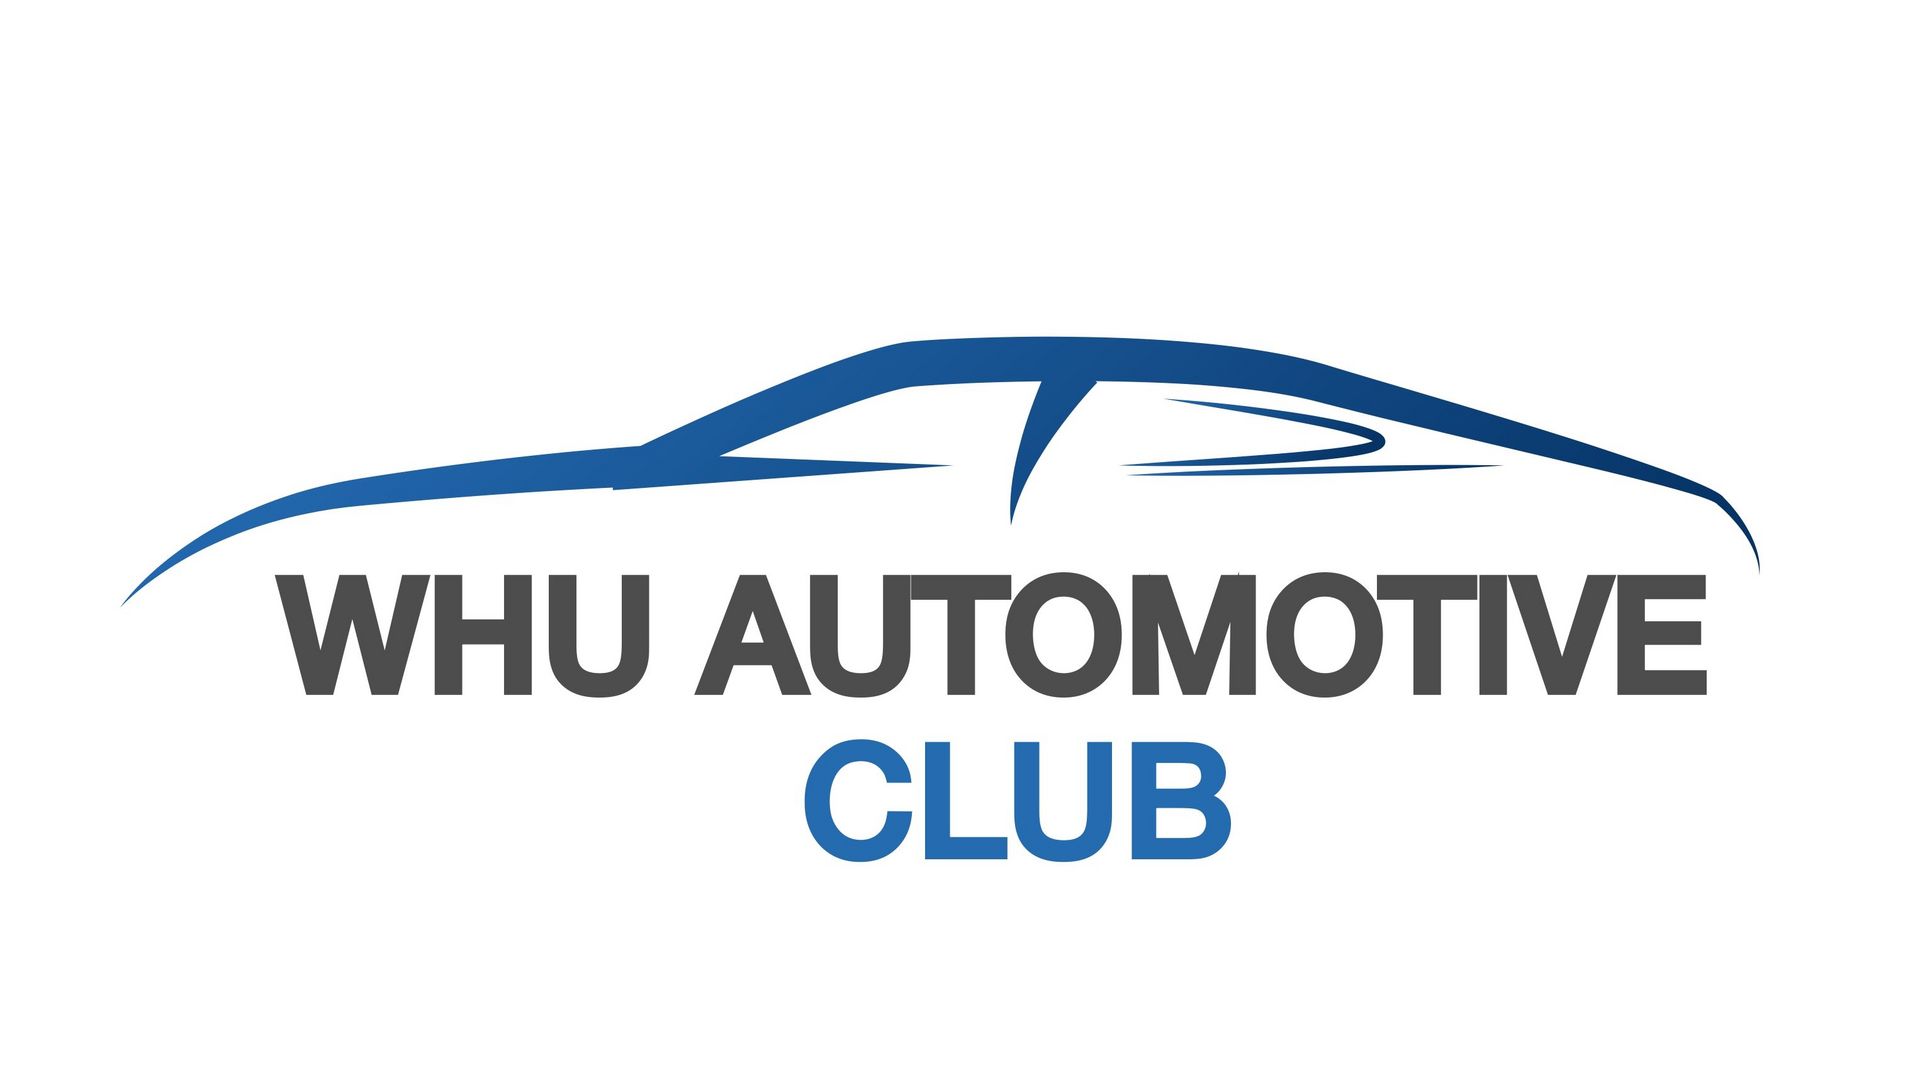 WHU Automotive Club